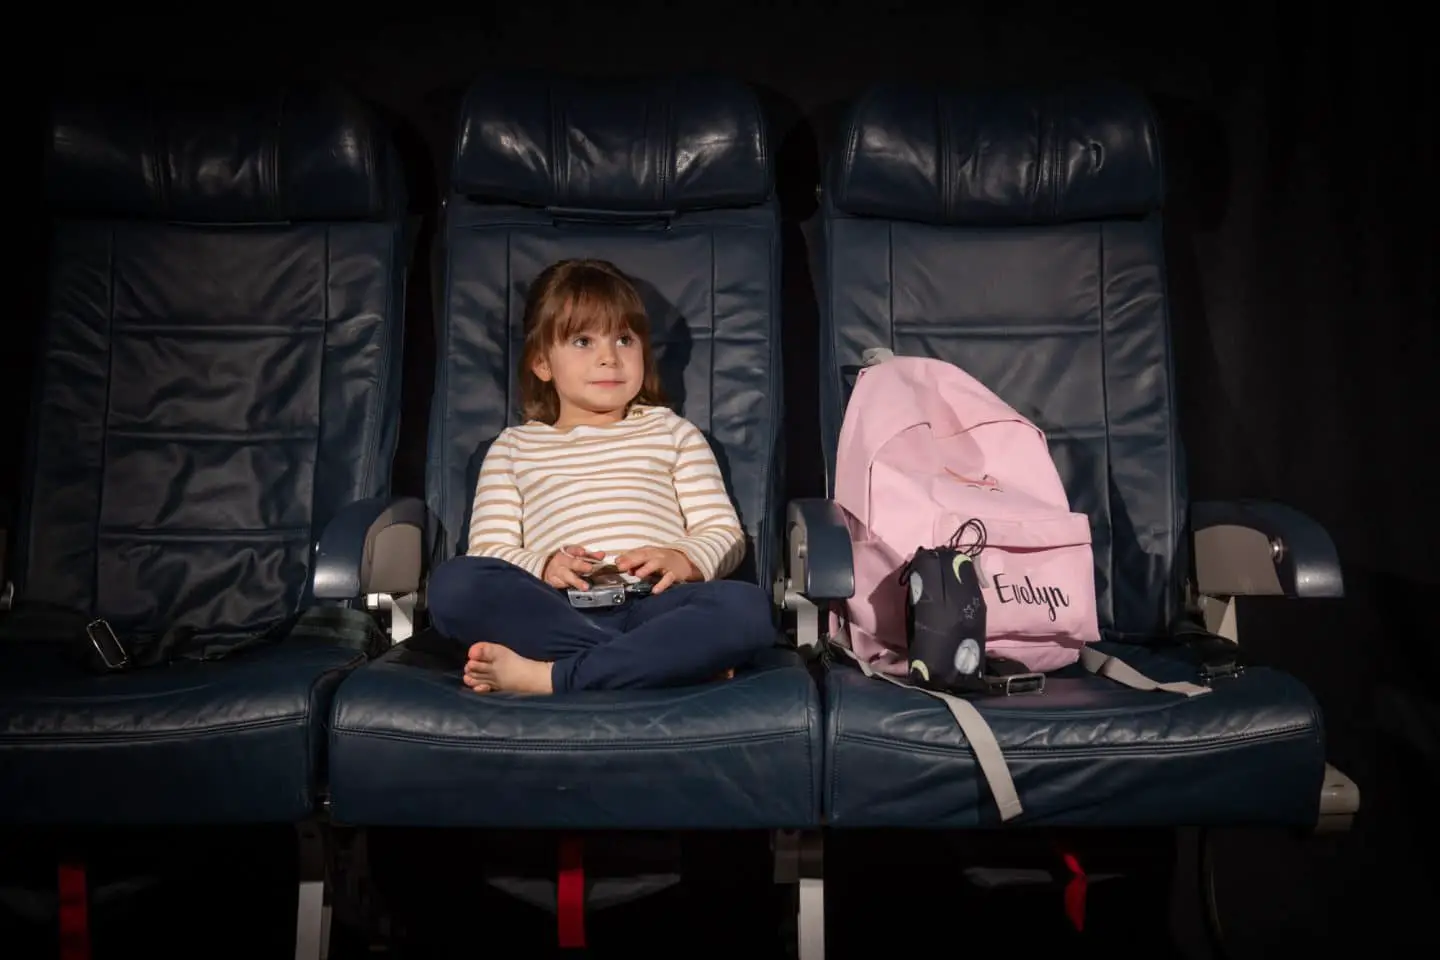 child sitting on plane seat beside bag